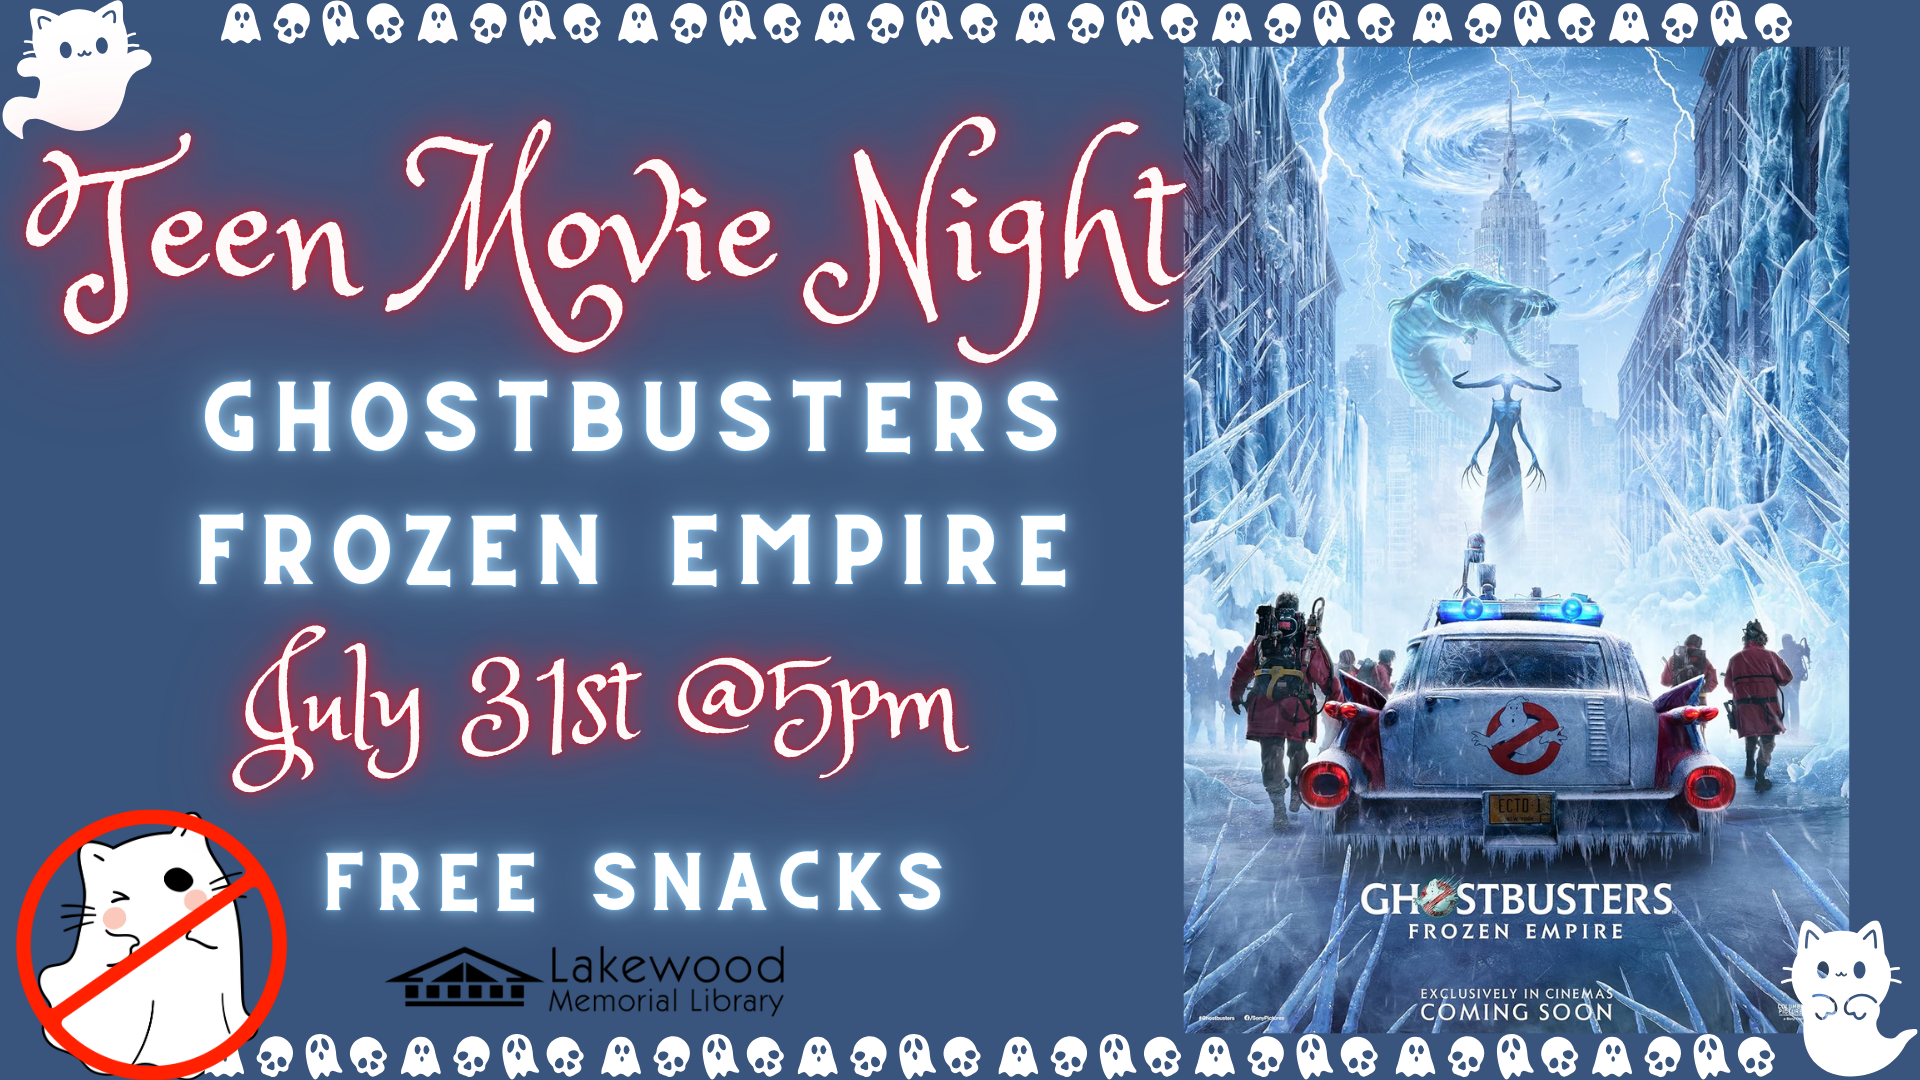 Teen Movie Night: Ghostbusters Frozen Empire